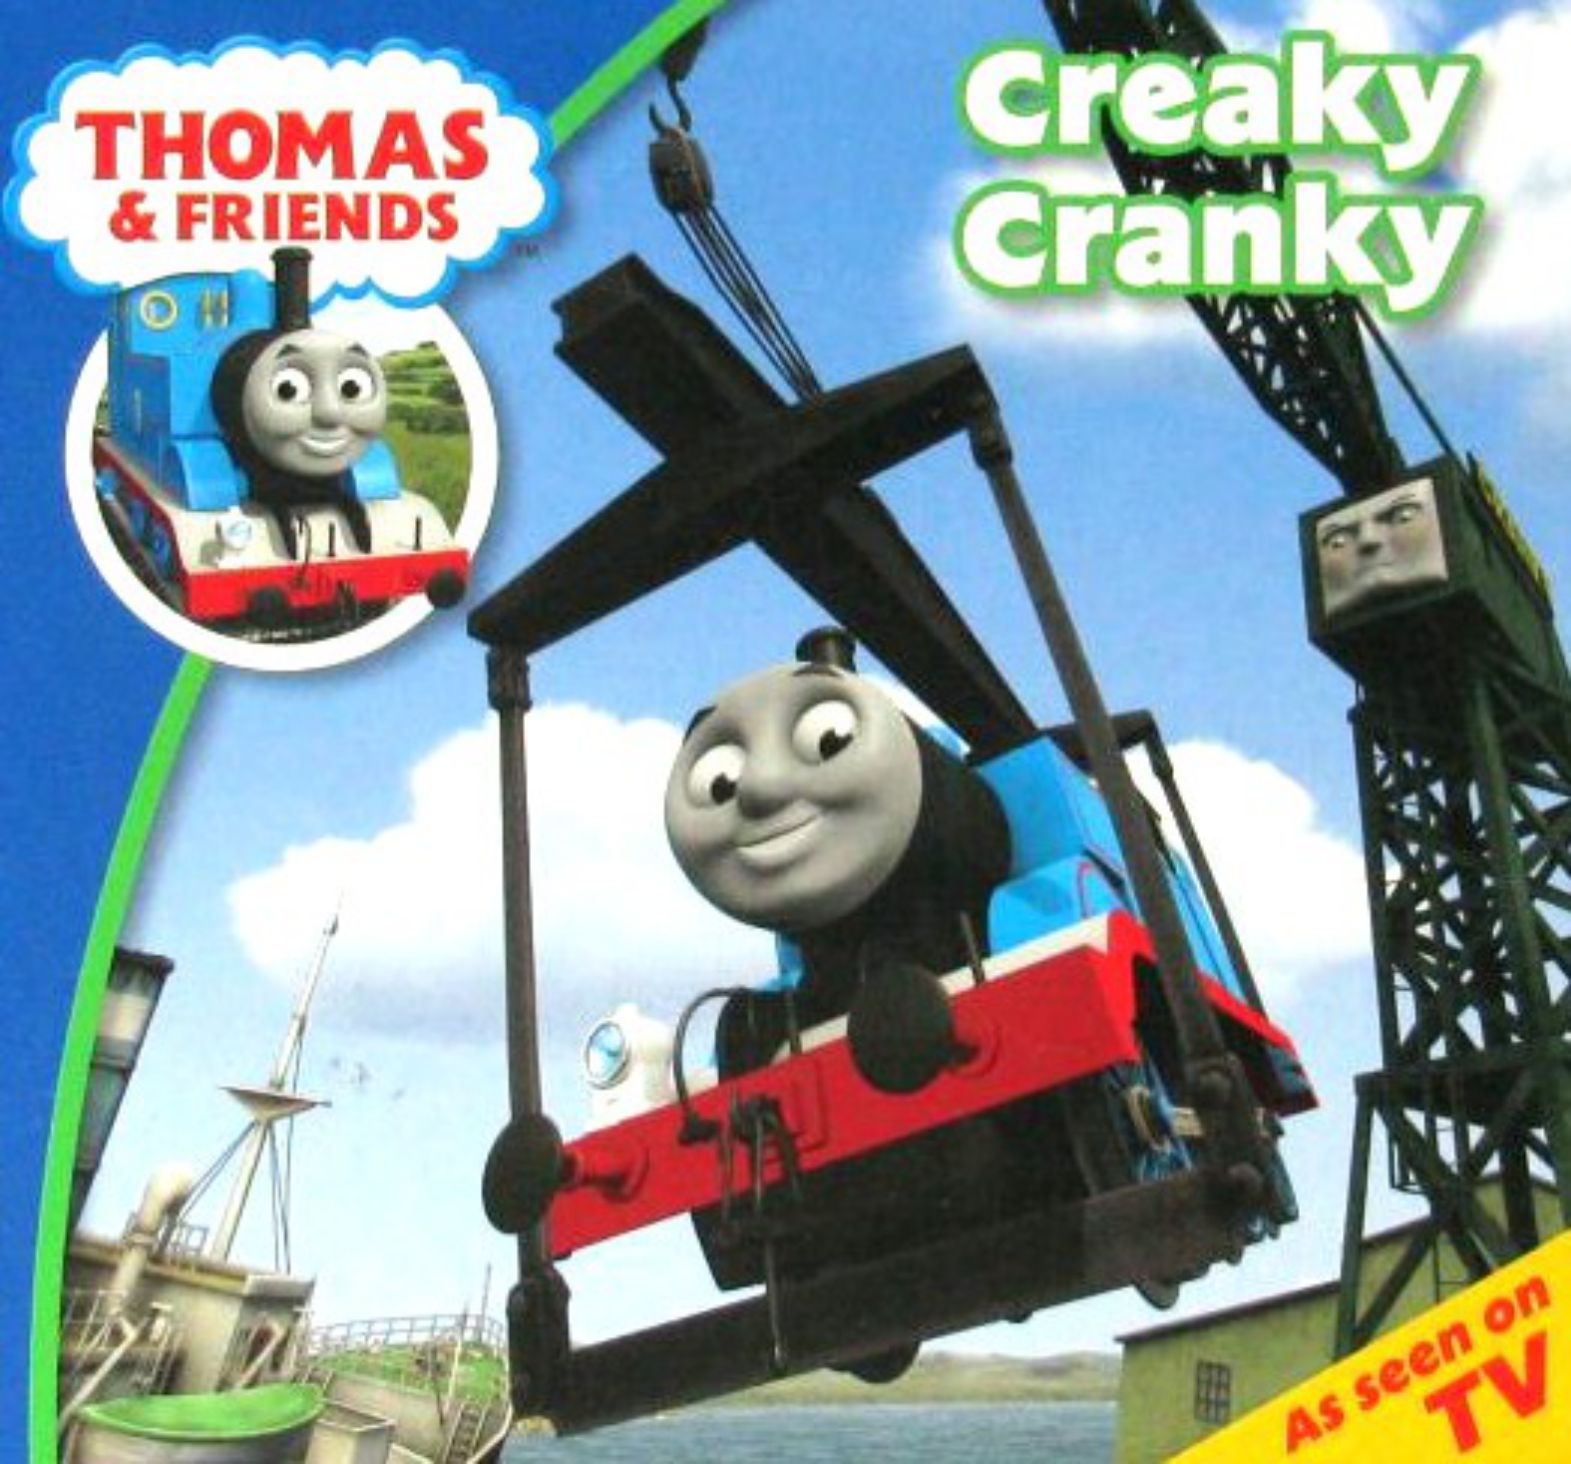 creaky cranky(thomas & friends)